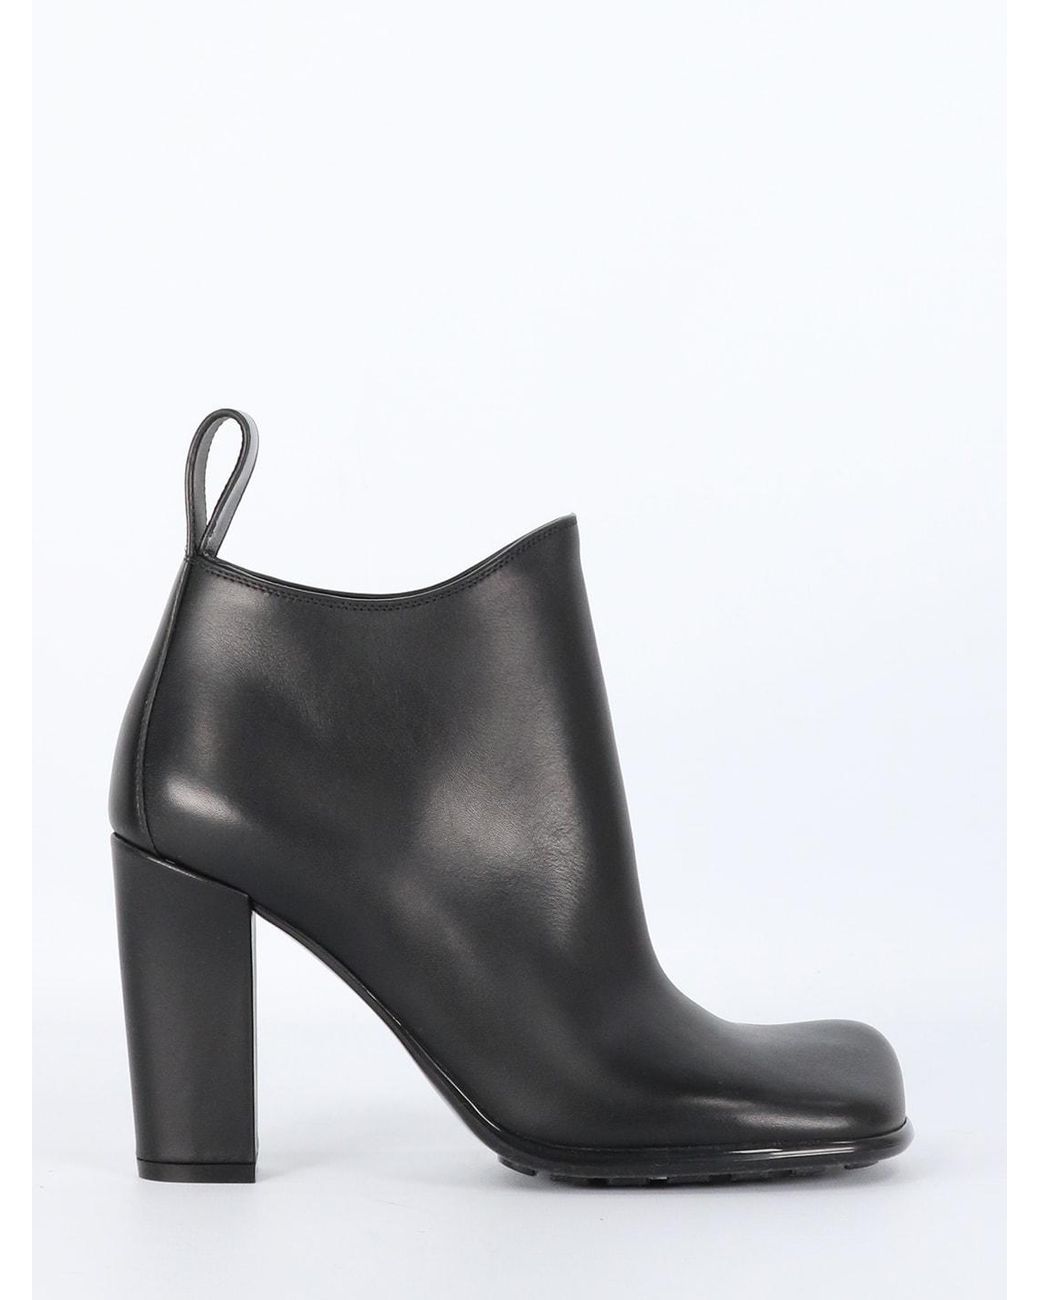 Bottega Veneta Storm Leather Ankle Boots in Black - Lyst